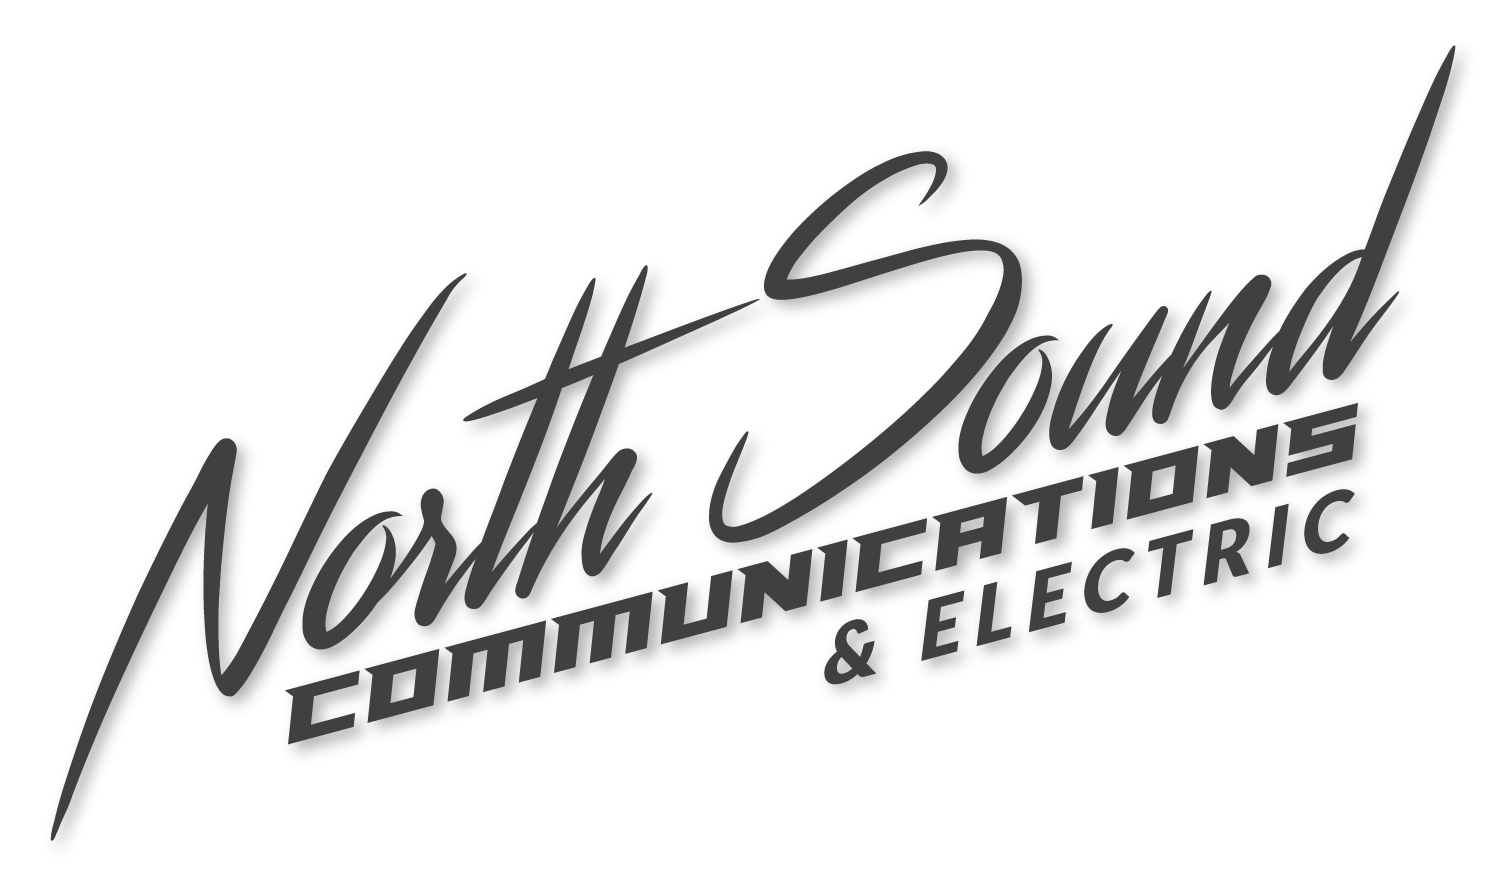 North Sound Communications & Electric​ Logo